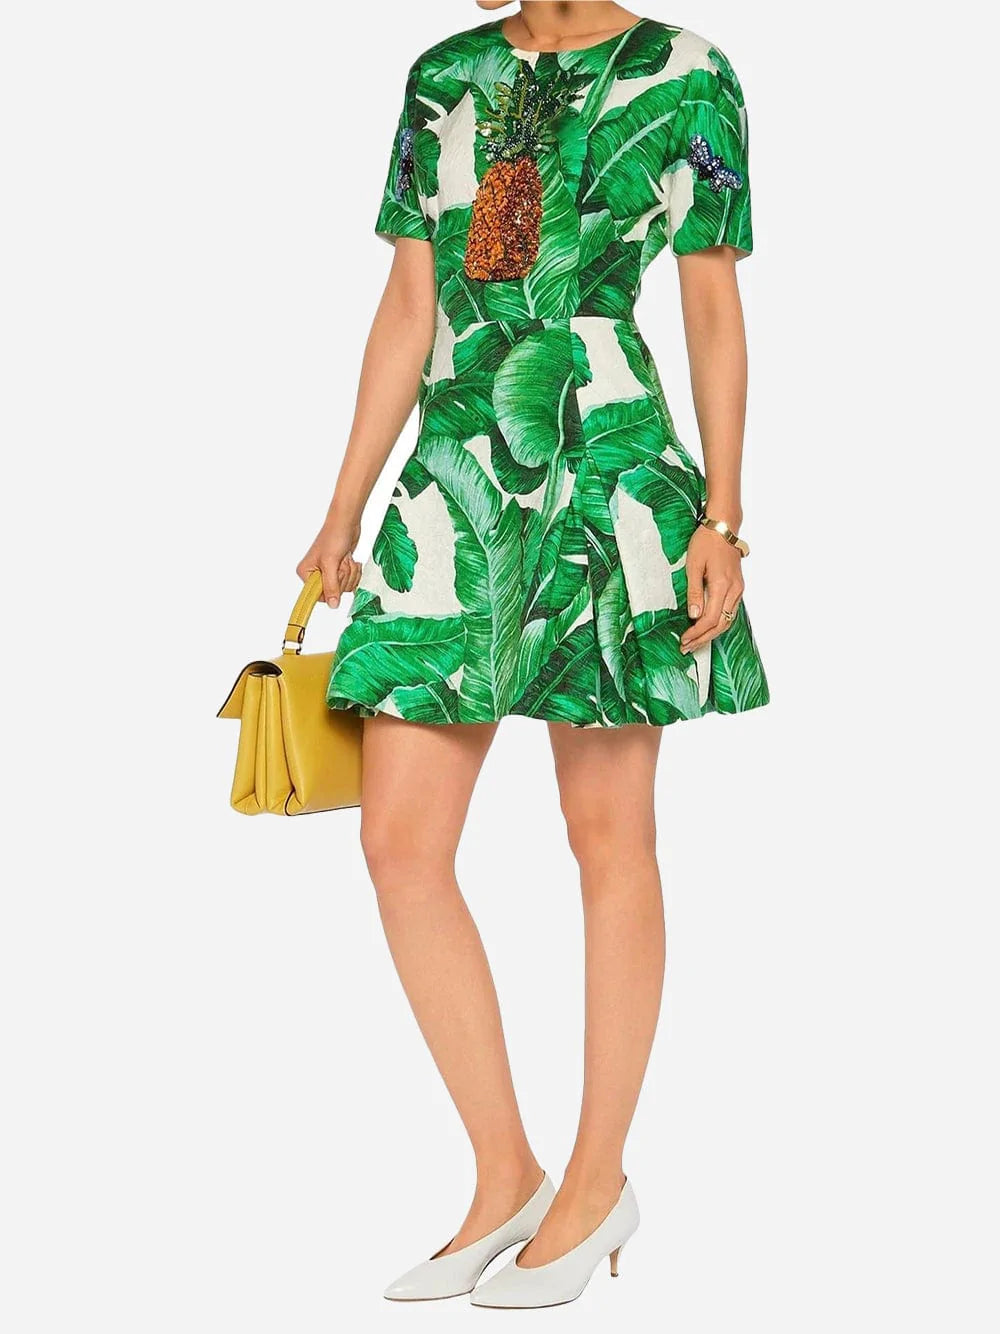 Dolce & Gabbana Banana Leaf Pineapple Embellished Dress